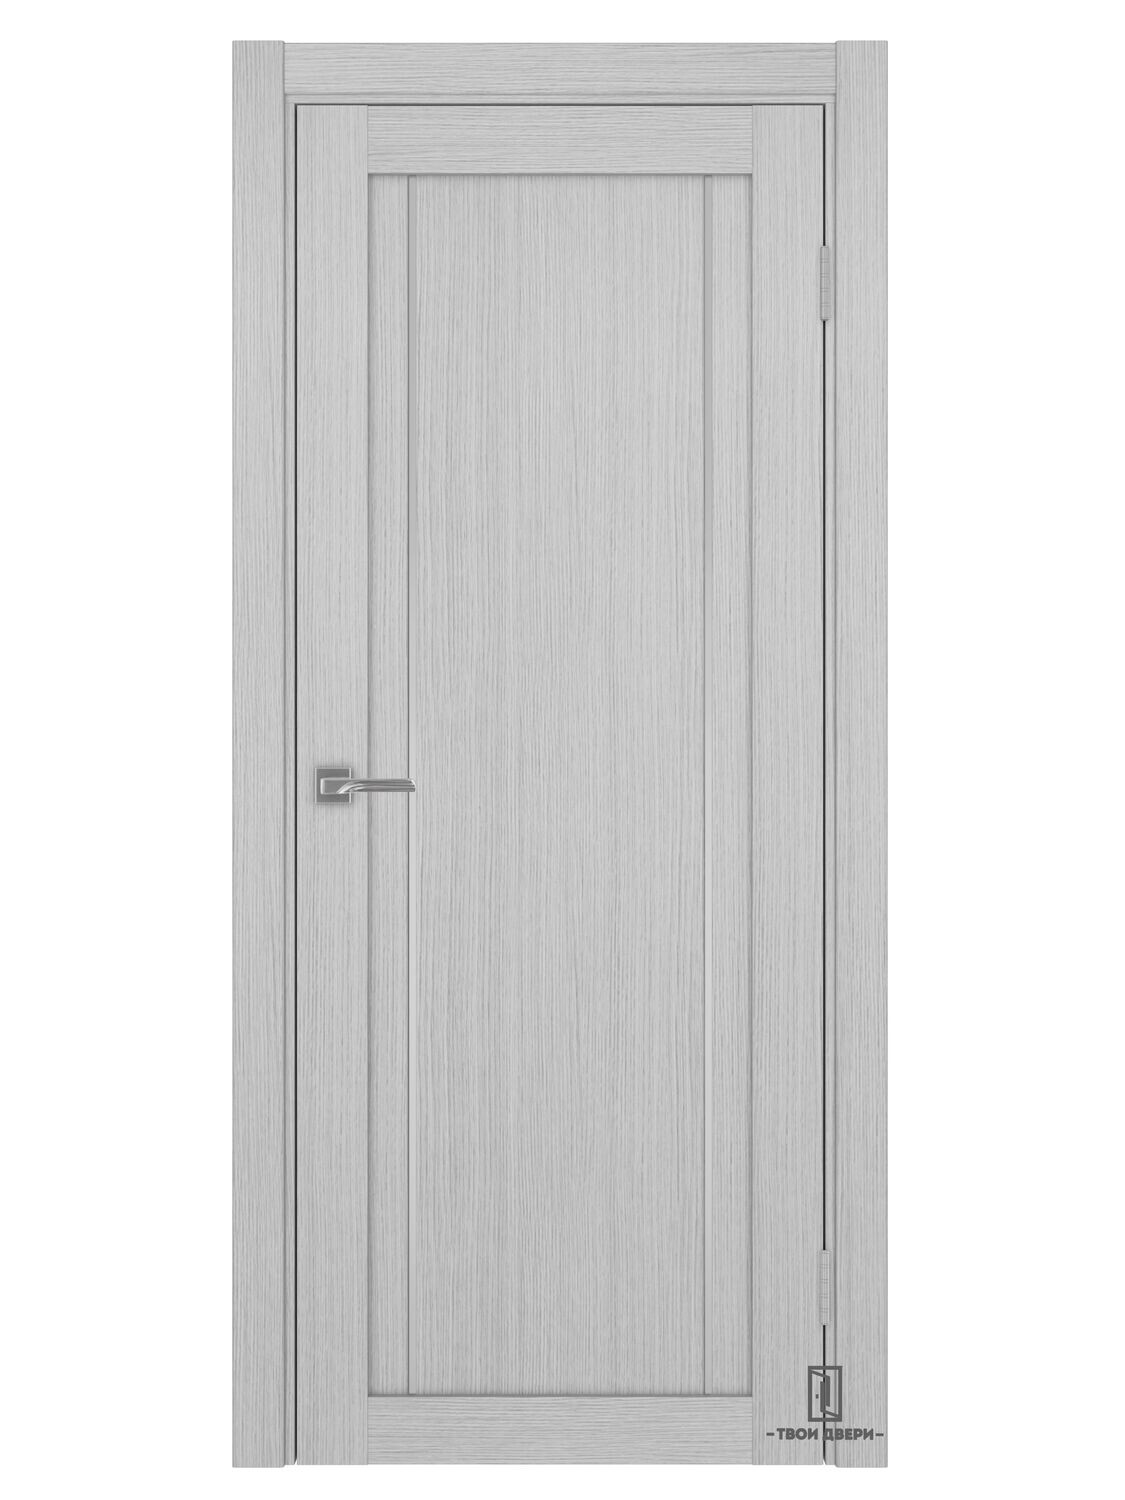 Дверь межкомнатная АПП 522.111 (молдинги), дуб серый